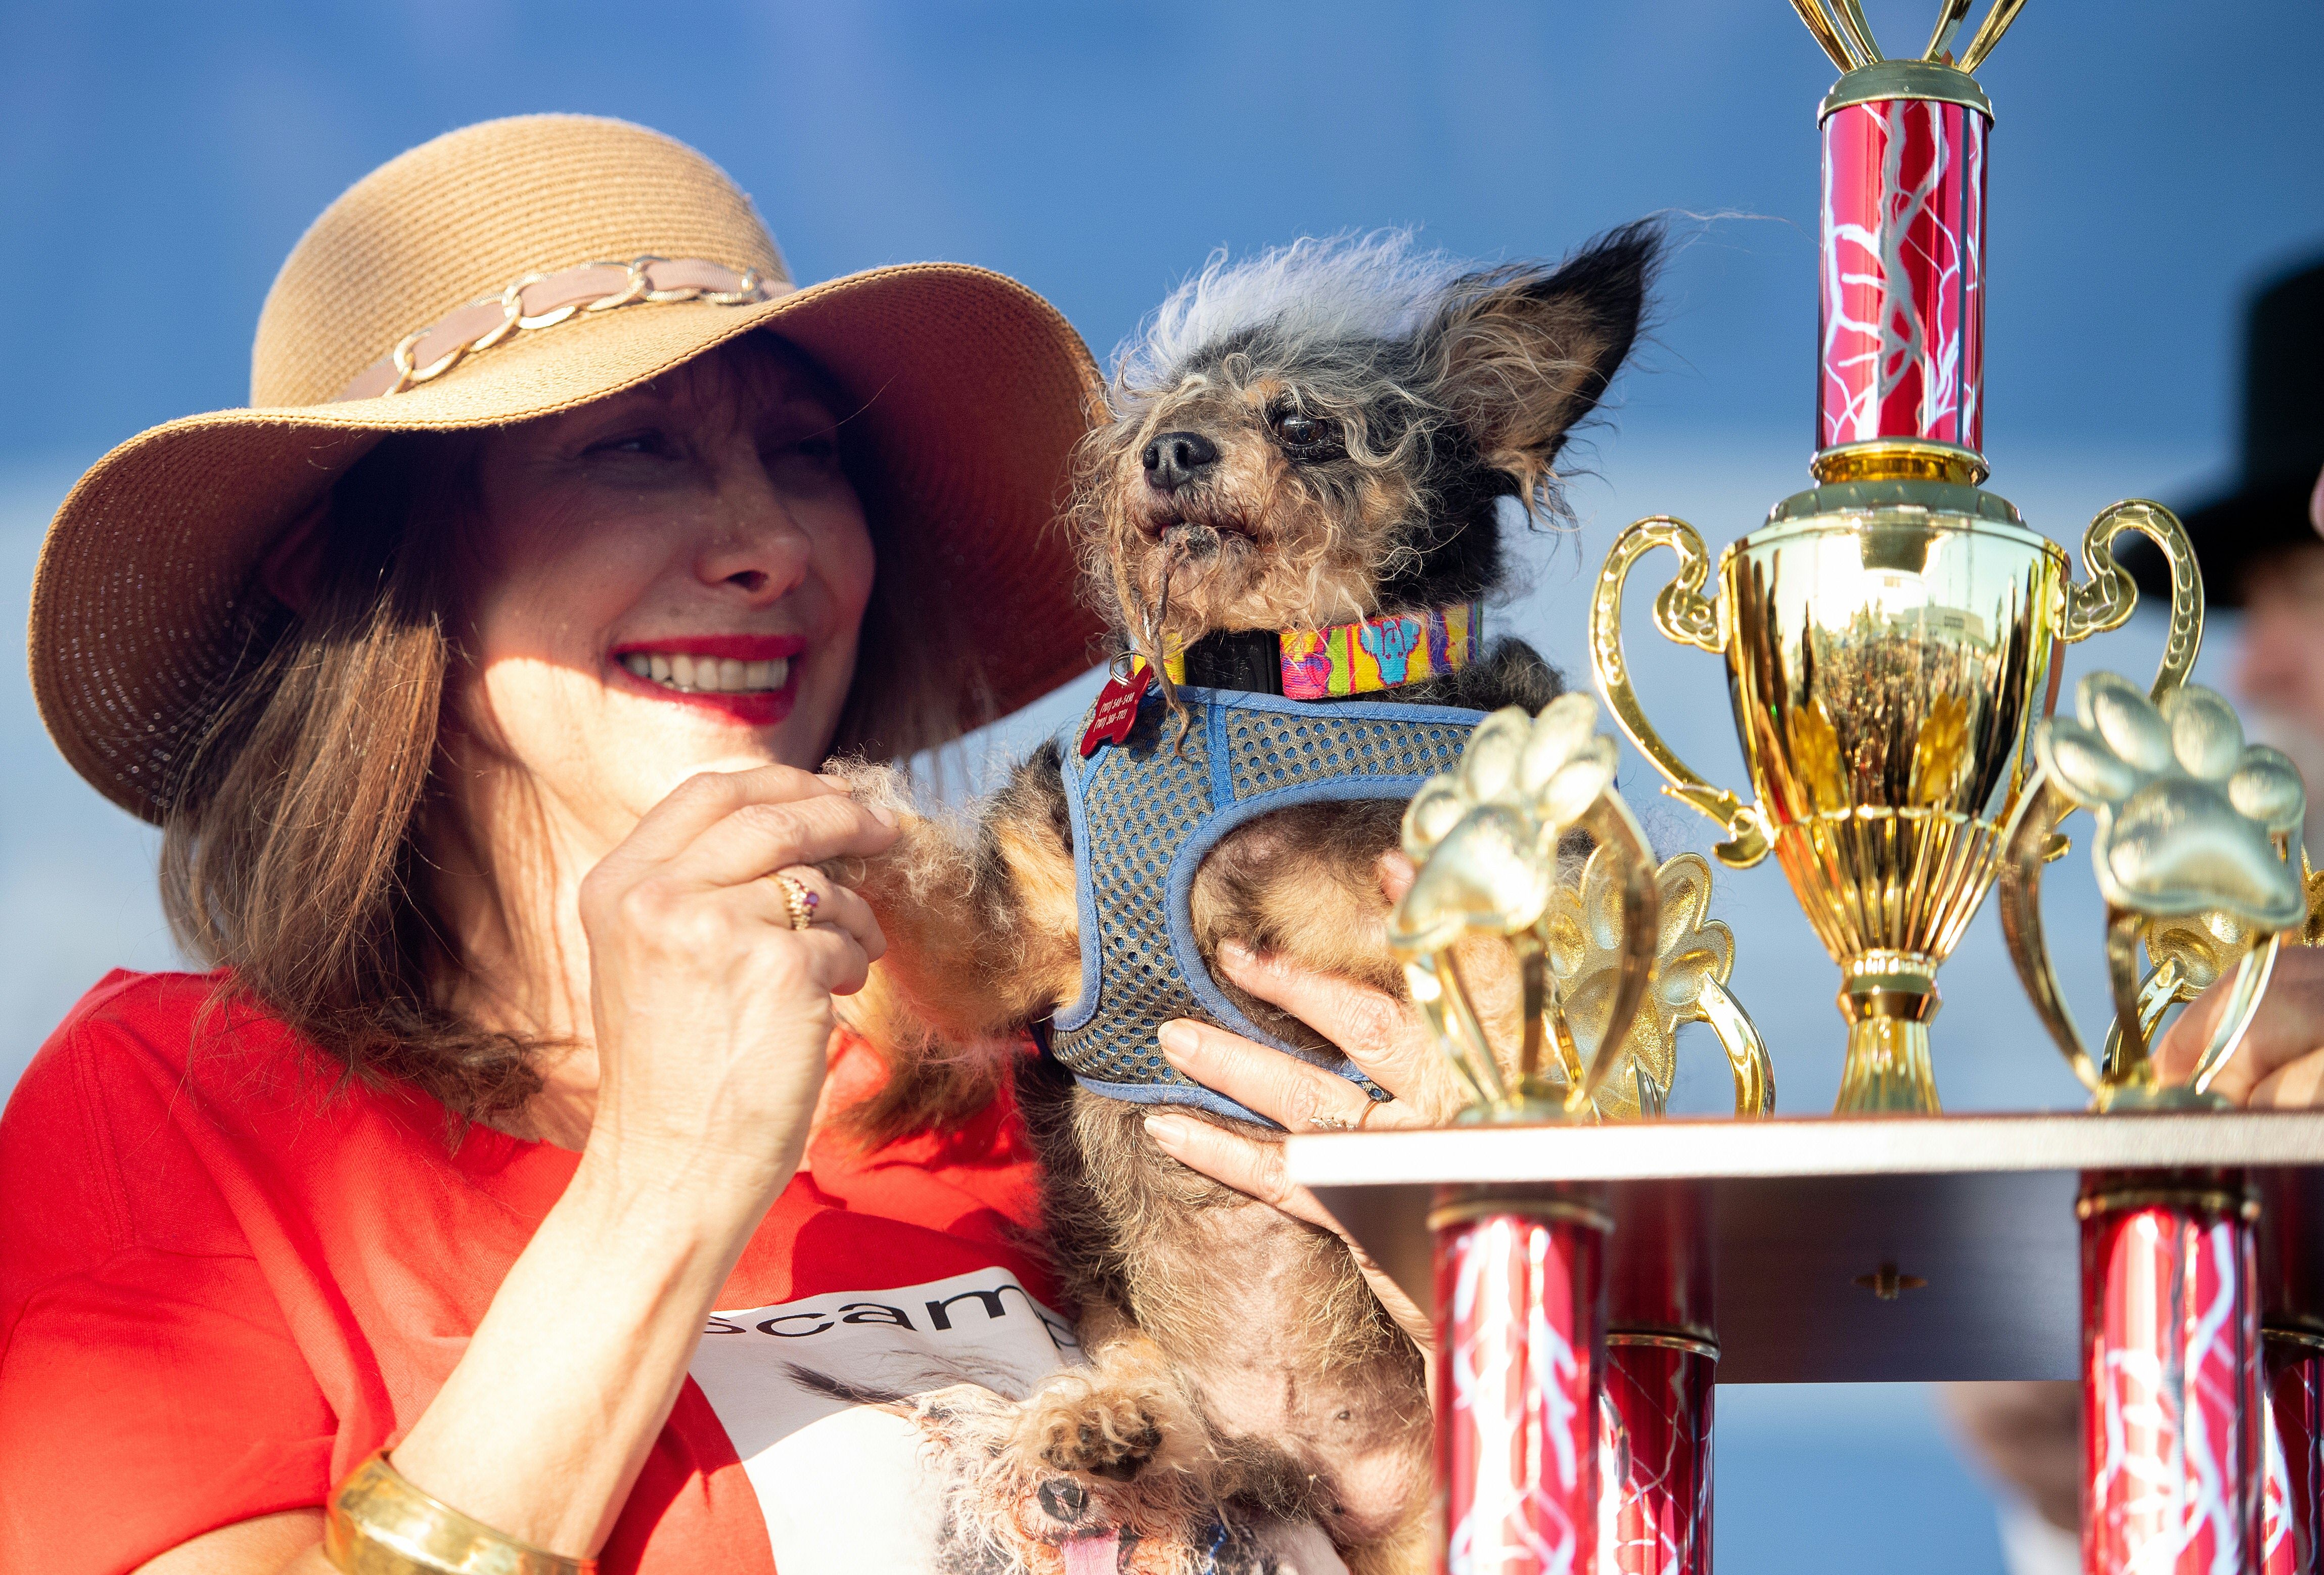 scamp the tramp worlds ugliest dog contest winner